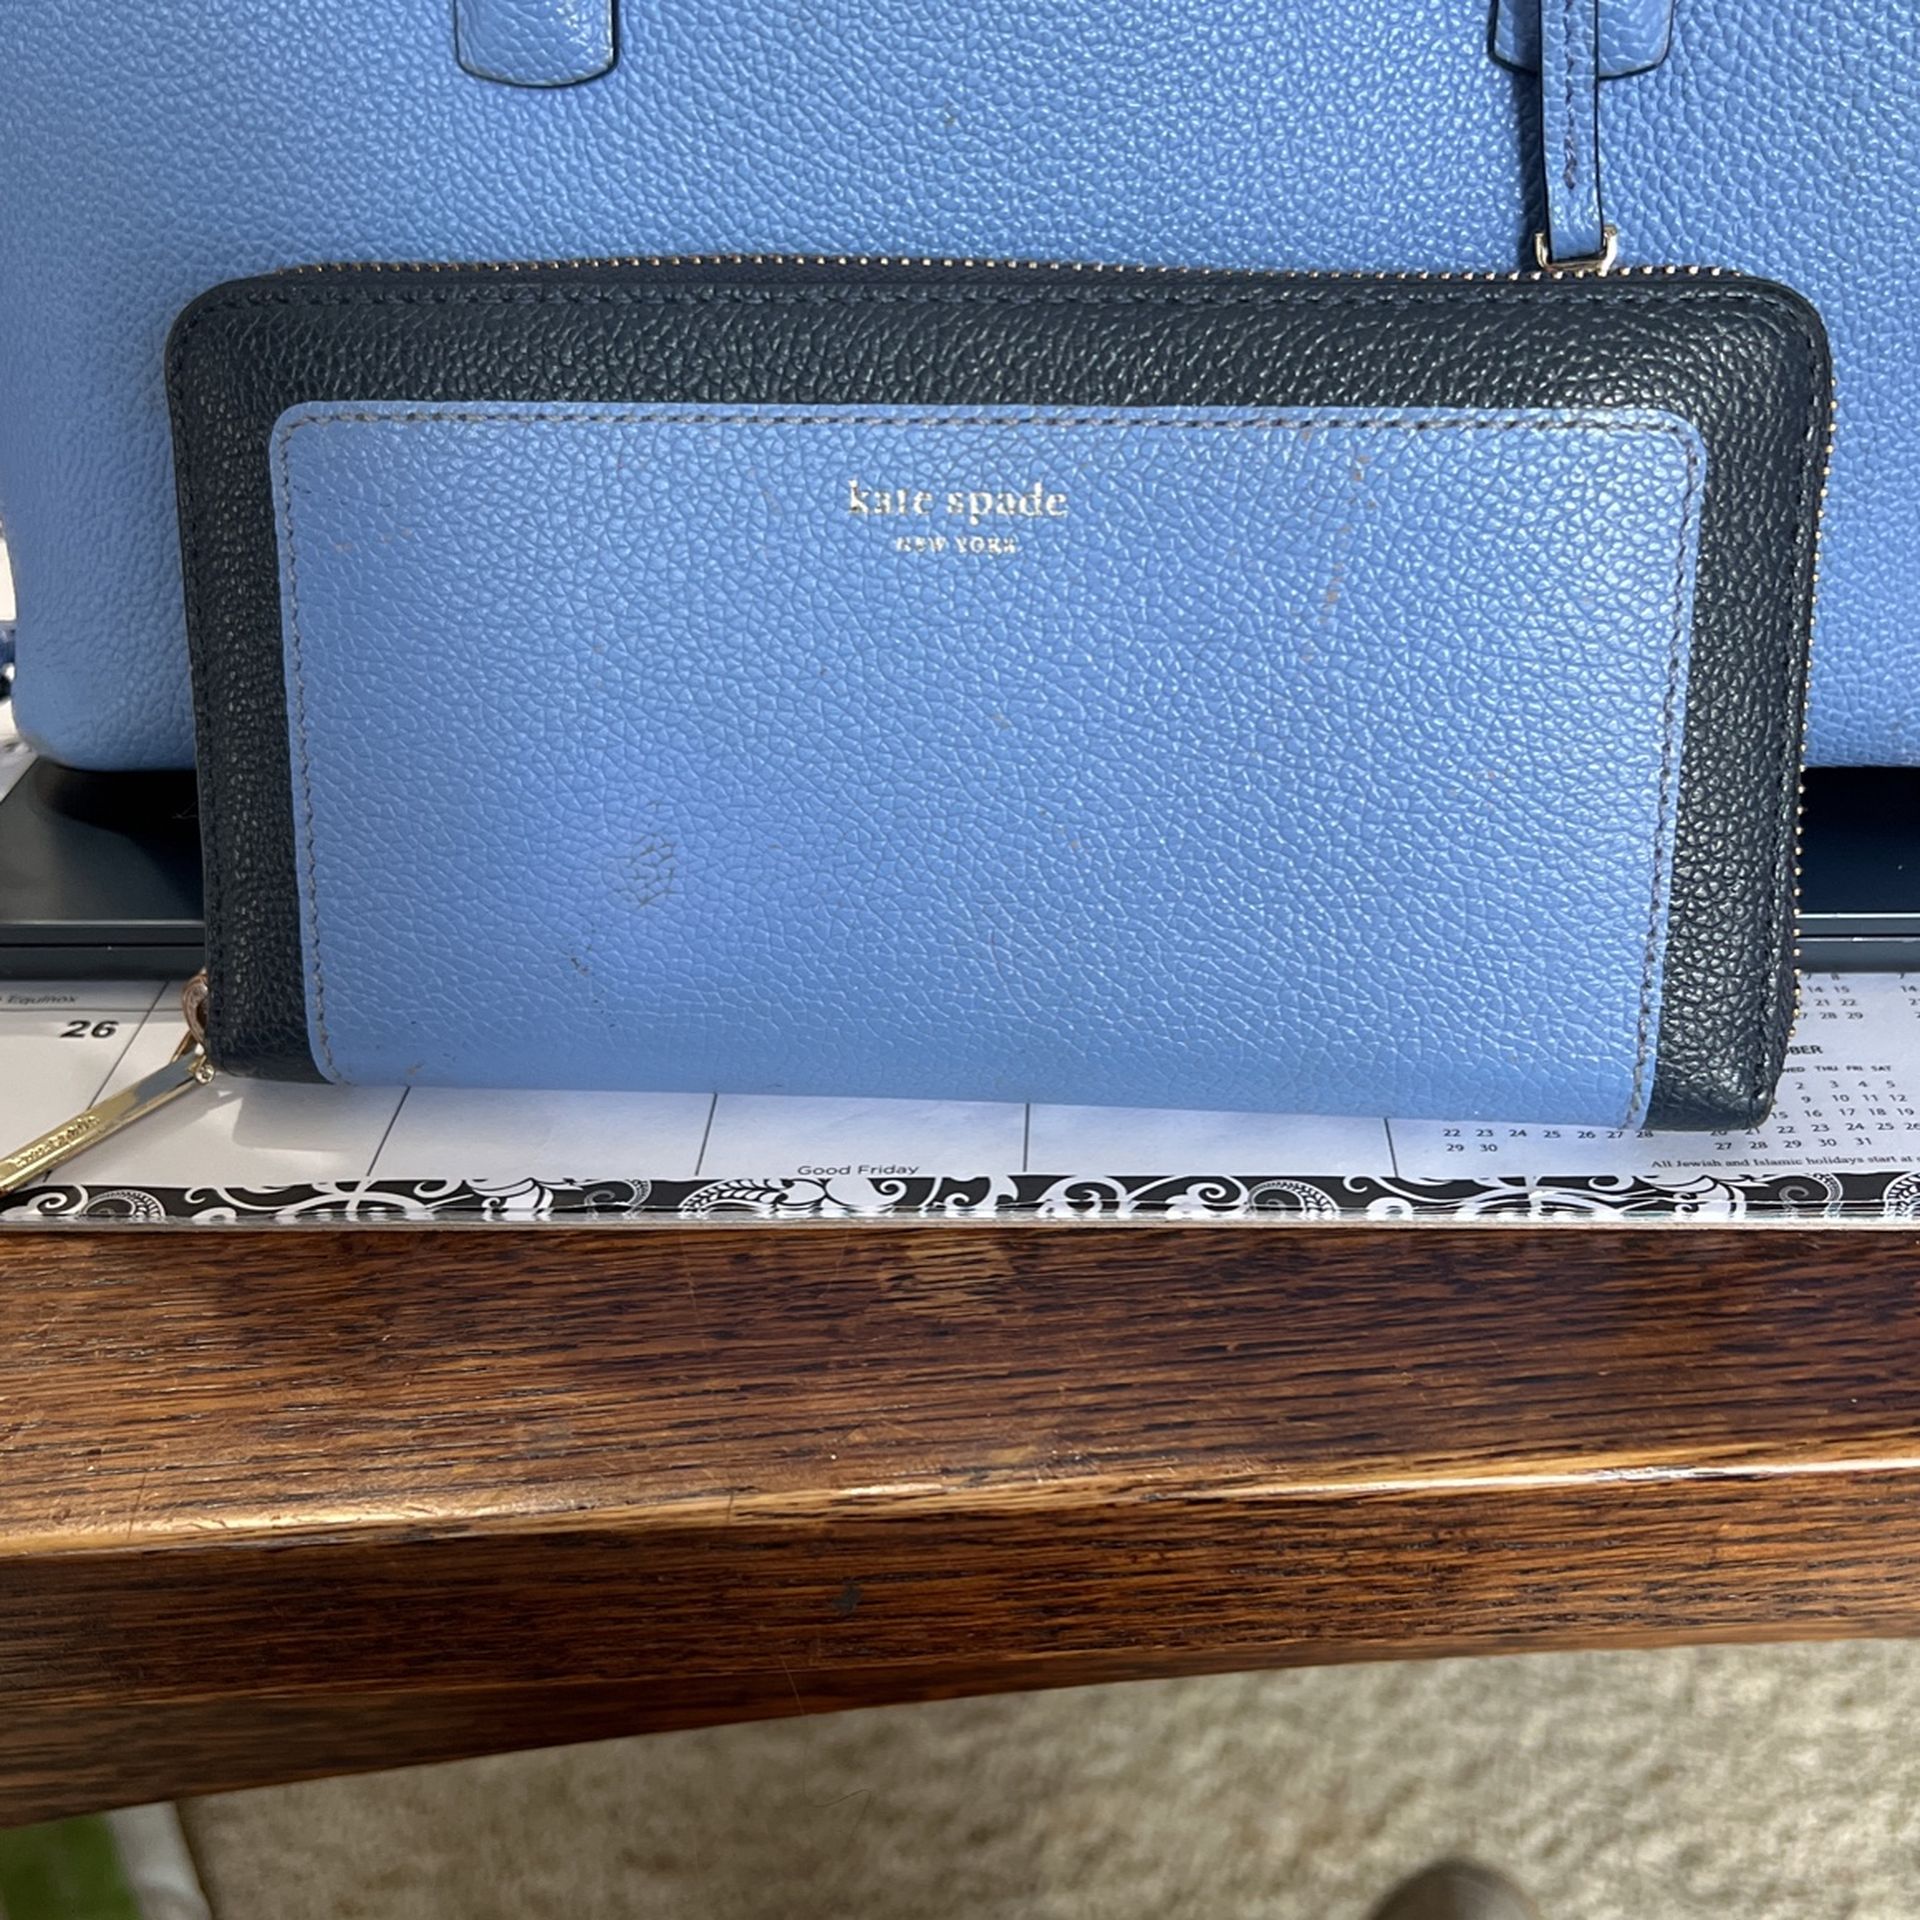 Blue And Black Kate Spade Wallet With Gold, Kate Spade Emblem